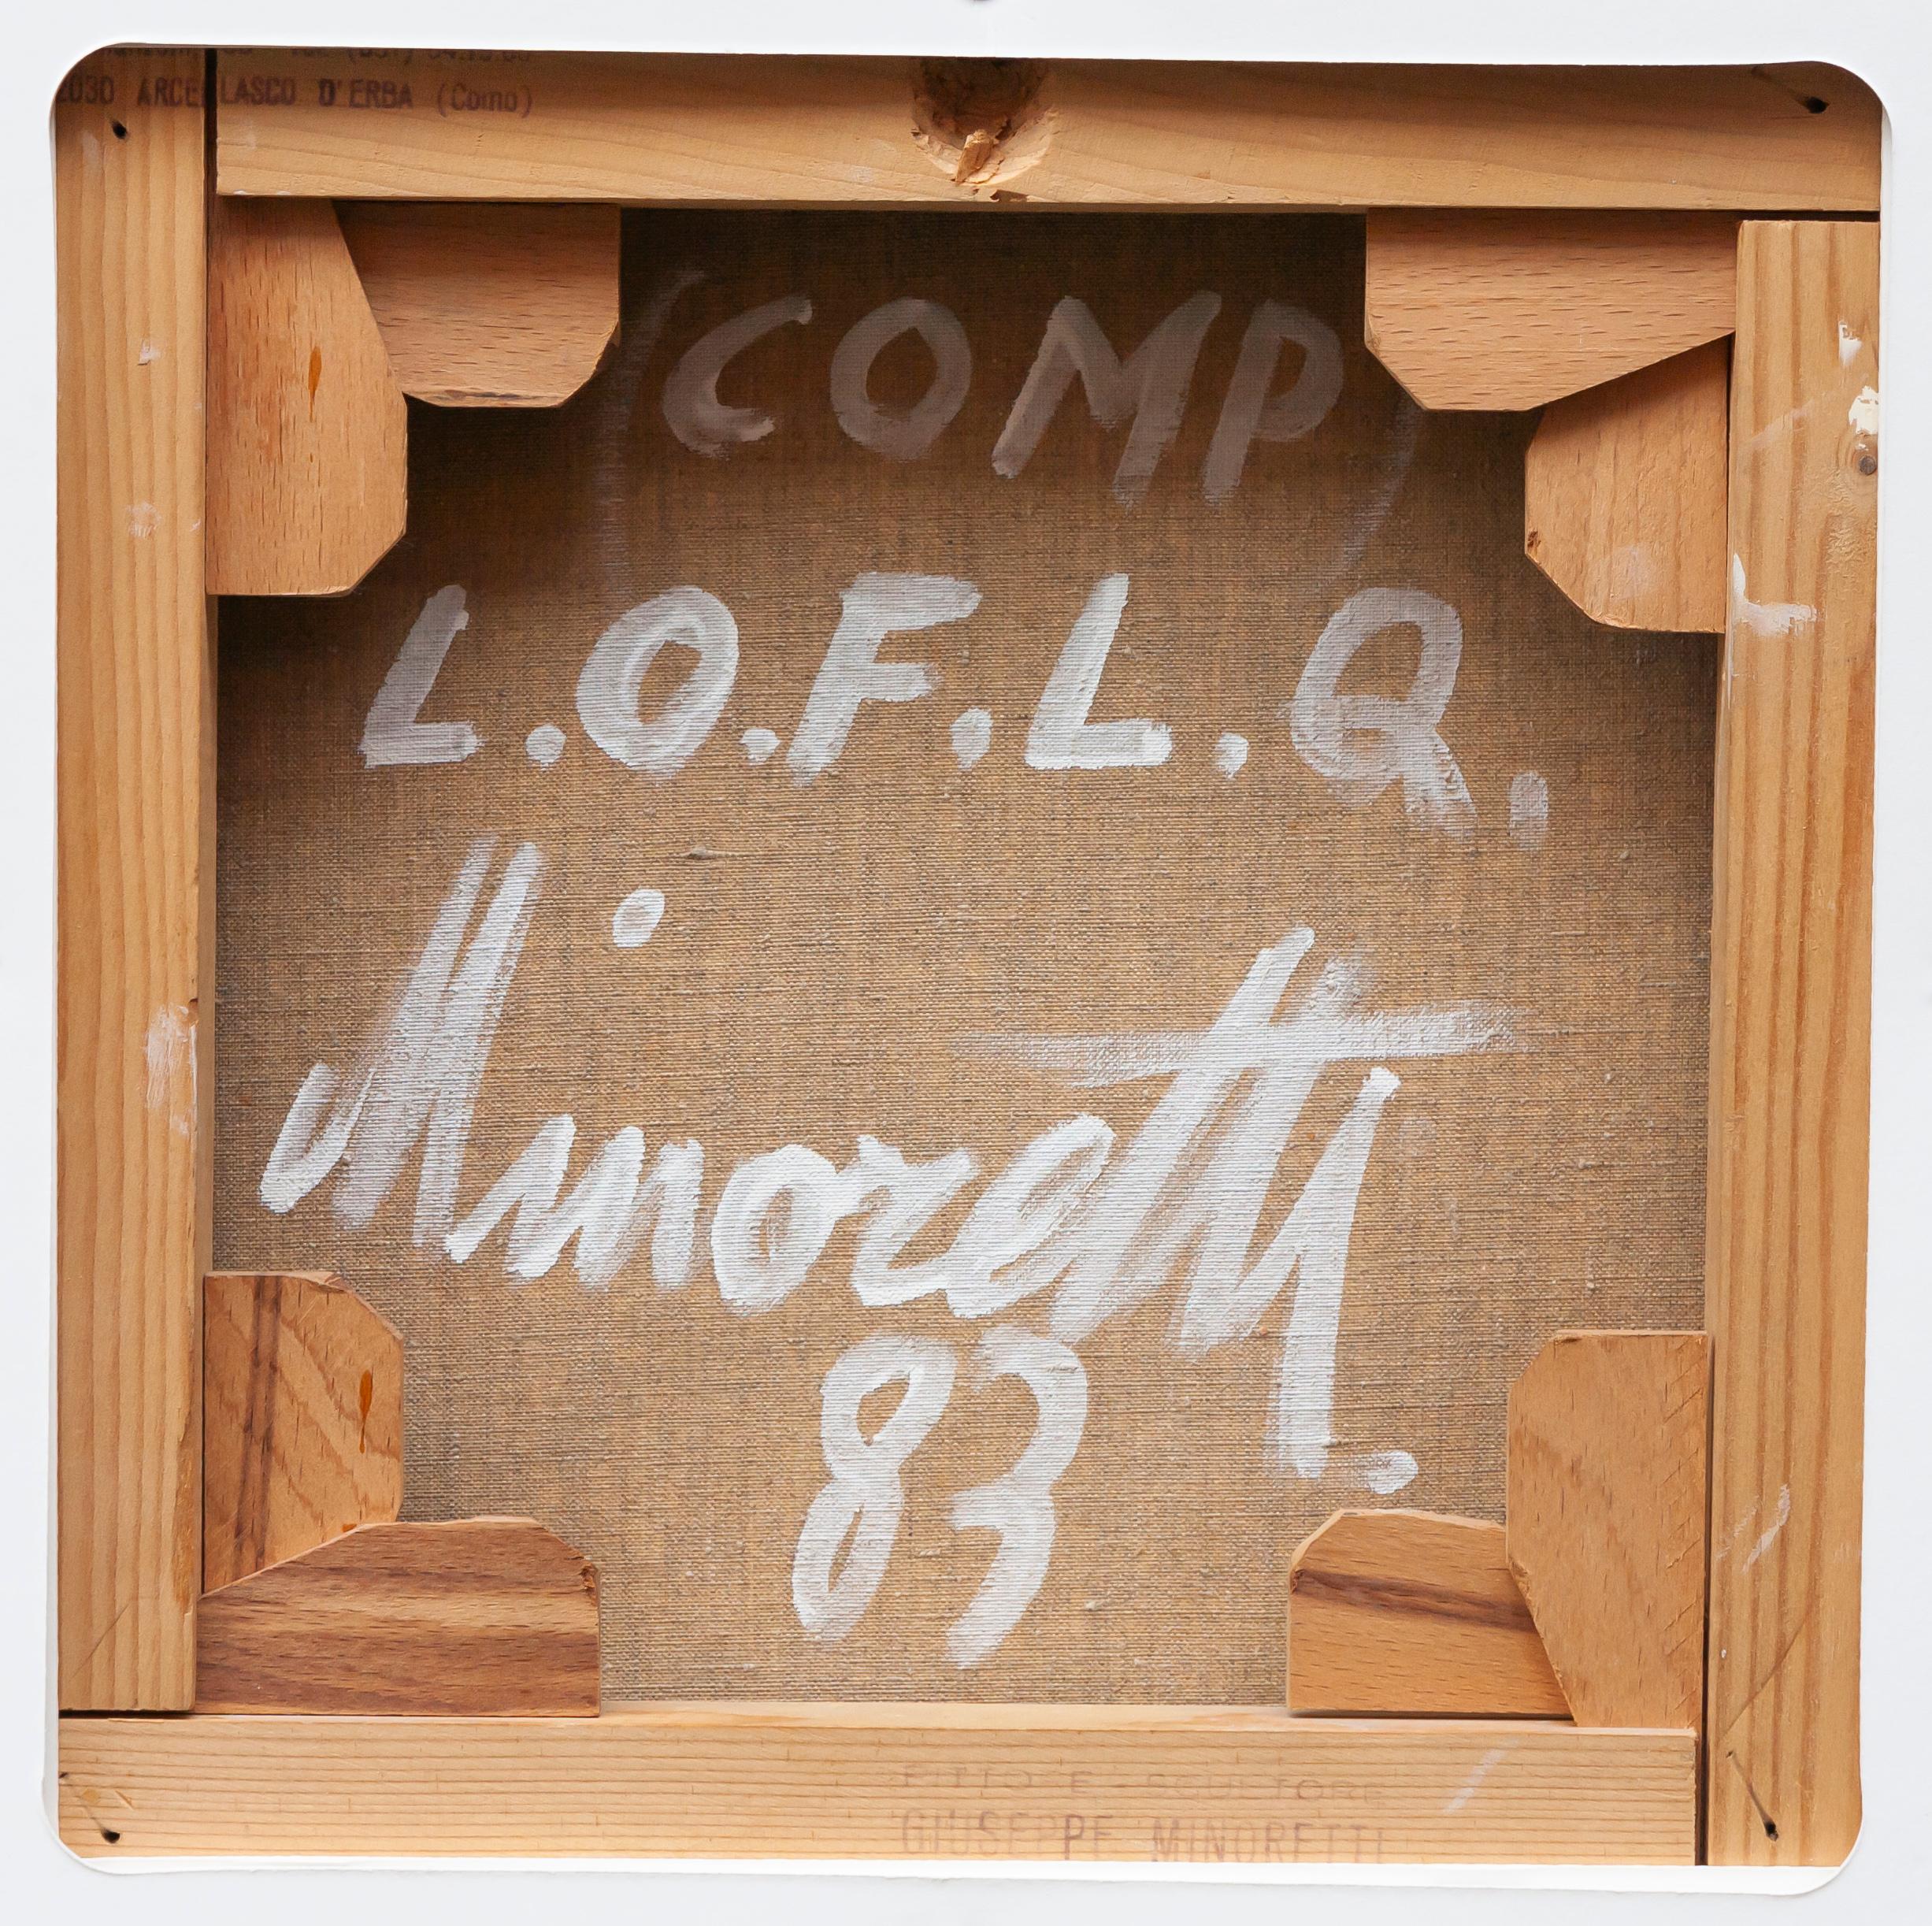 Giuseppe Minoretti (Erba, Como - 1938)

L.O.F.L.Q. composition.
Acrylic on Canvas
1983
Size: 30x30 cm - thickness 3 cm (52 x 52 x 6.5 including frame)
Invisible glass

Giuseppe Minoretti was born in Erba (Como) in 1938.
From 1950 to 1960 he attended